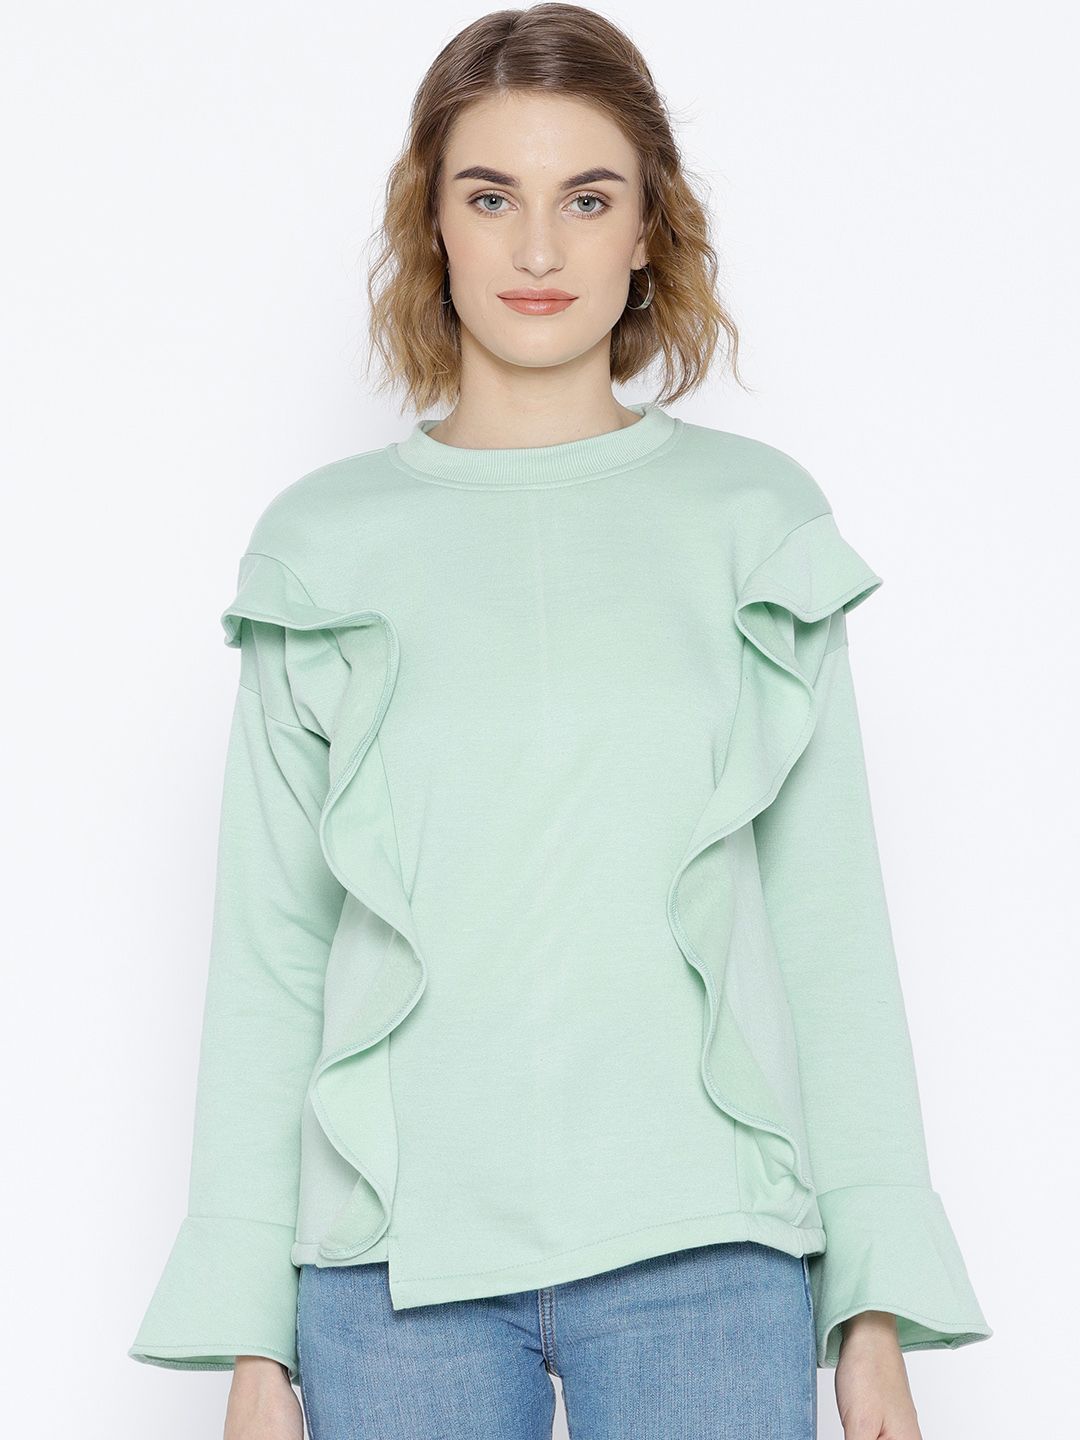 Belle Fille Women Green Solid Sweatshirt Price in India